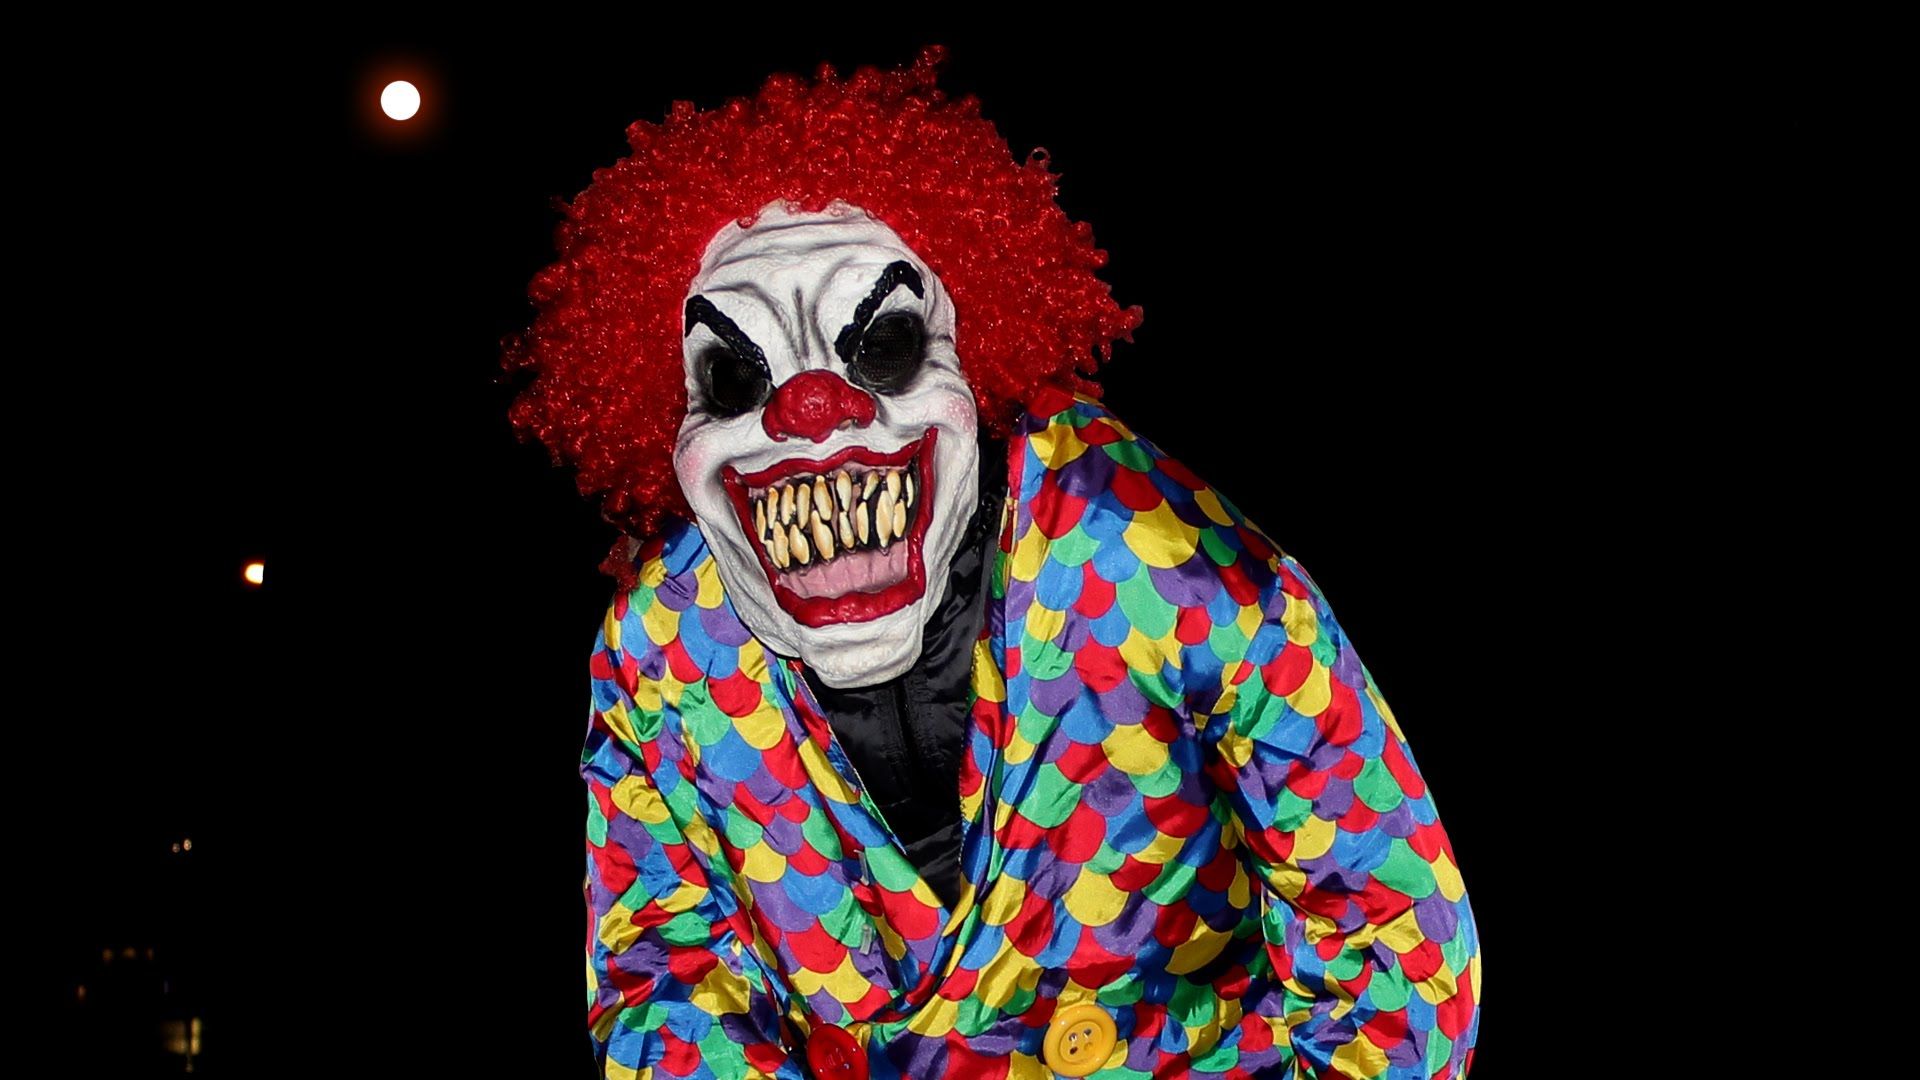 Halloween Clown Prank & The JOKER mit KÜRBIS gemalt ! - YouTube